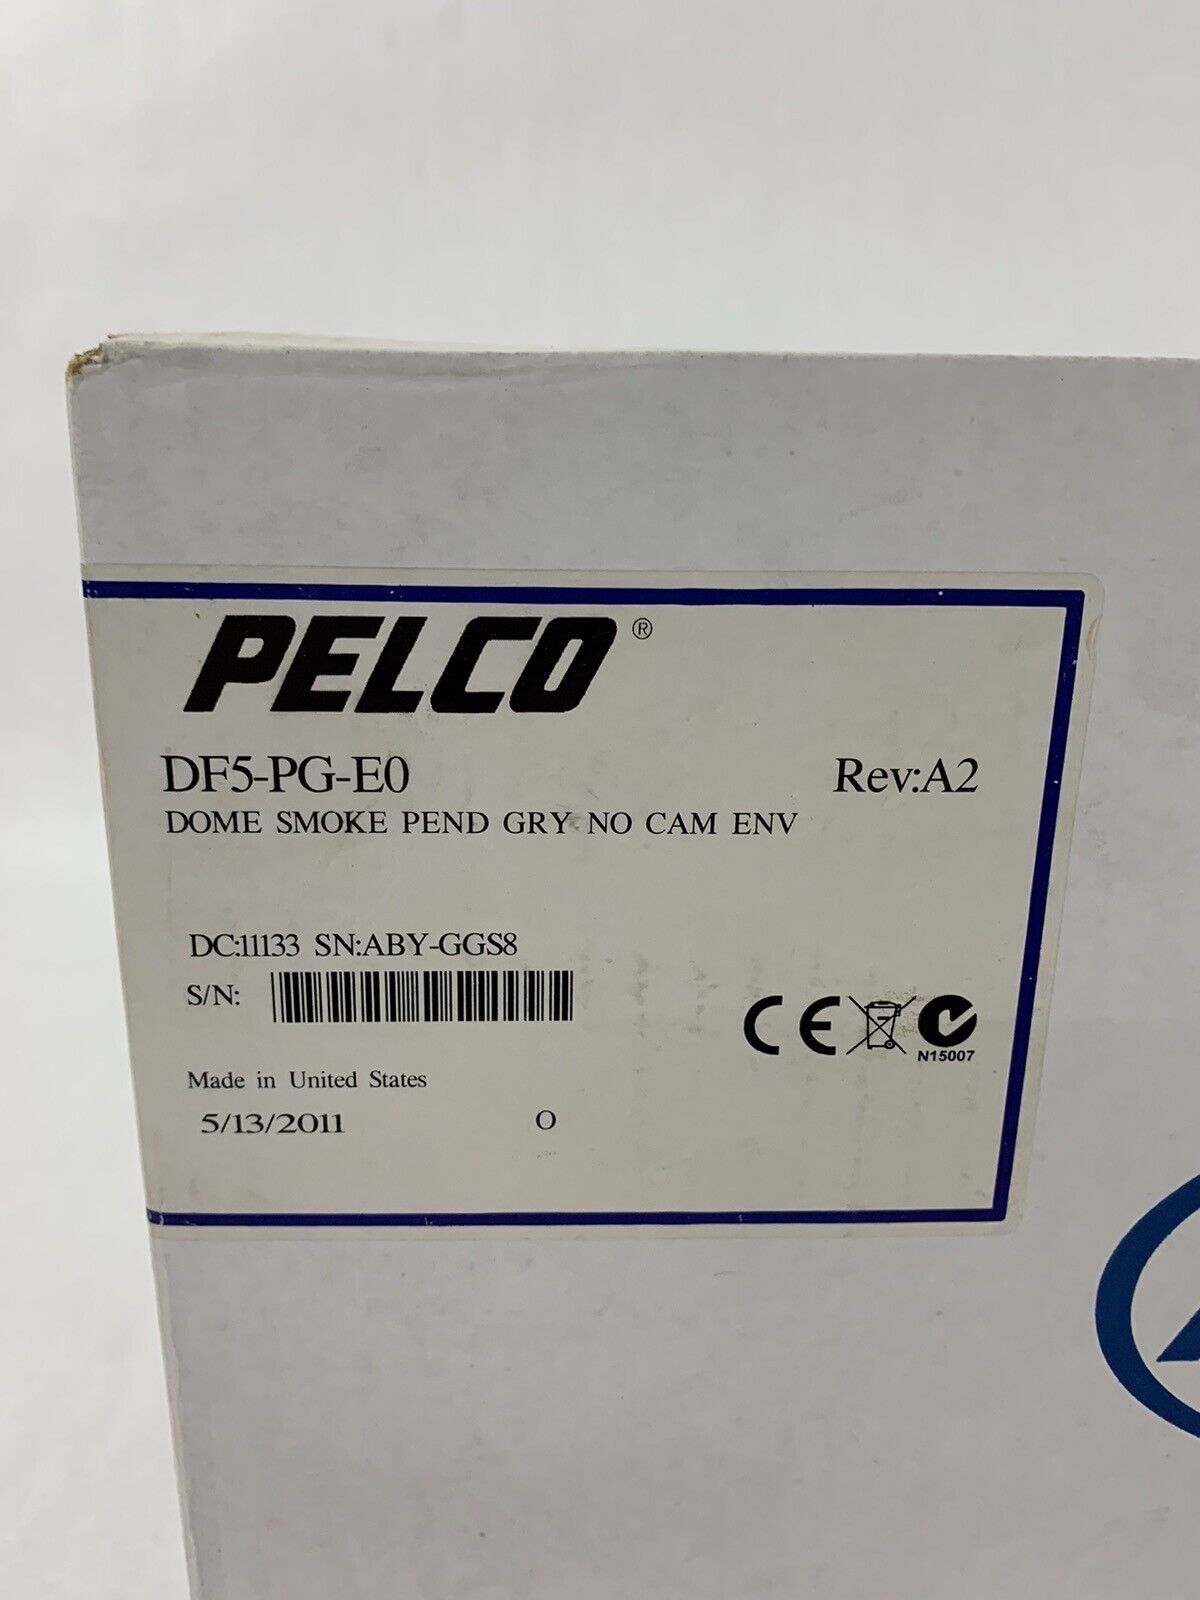 Pelco DF5-PG-E0 Series Fixed Mount Dome